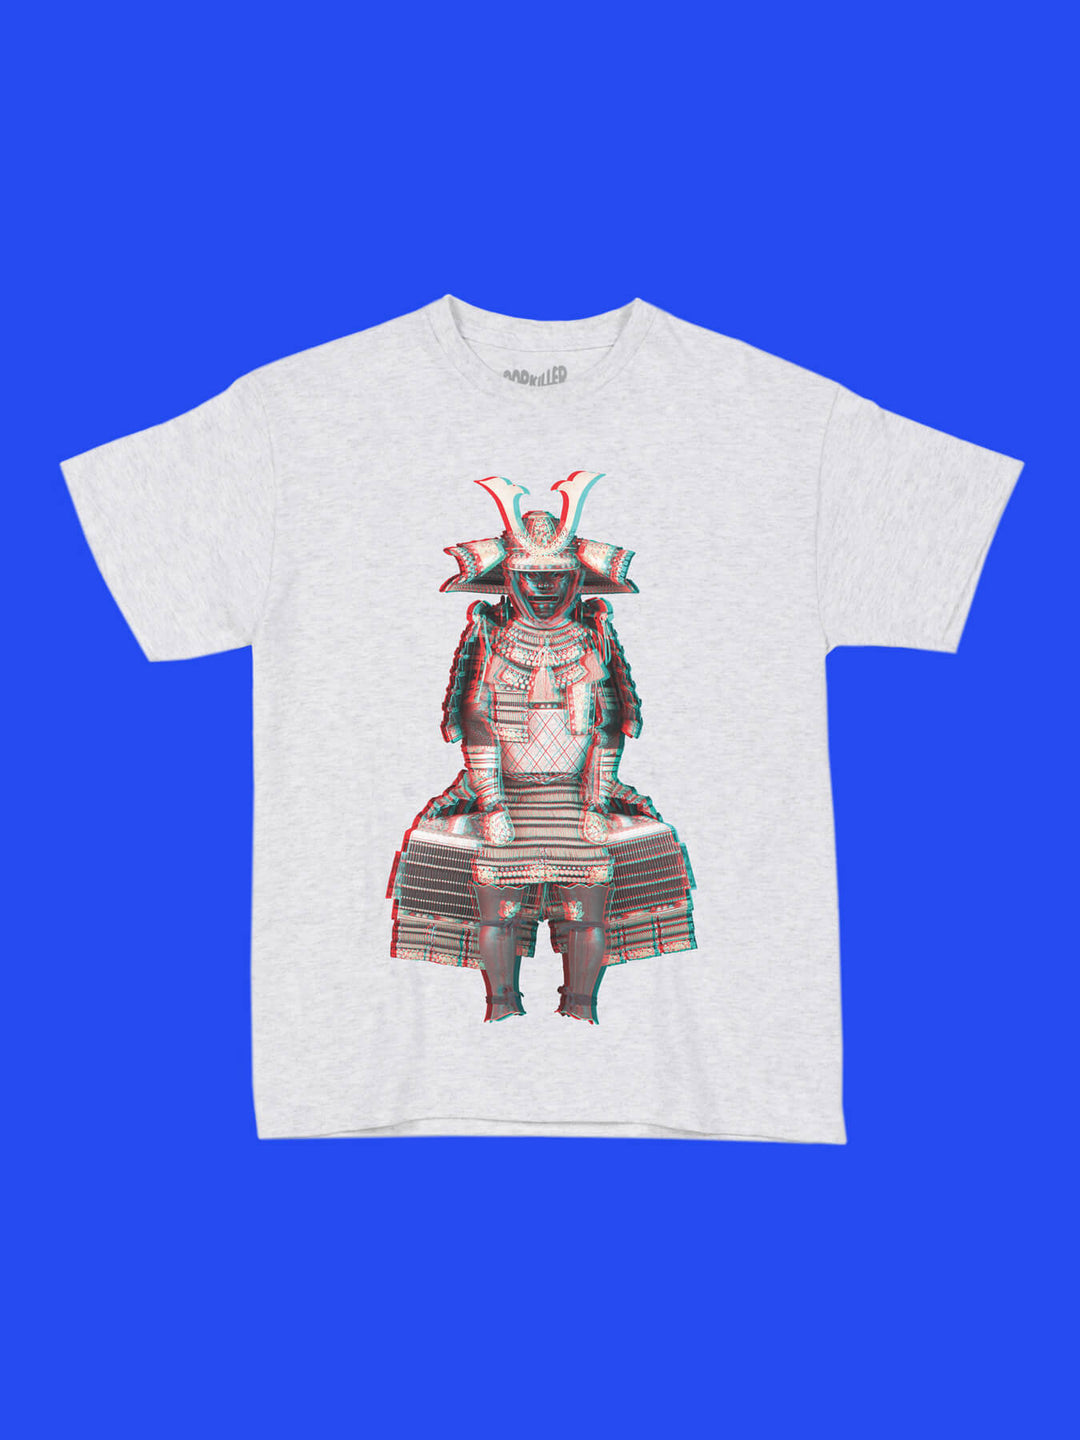 3D samurai armor graphic tshirt.